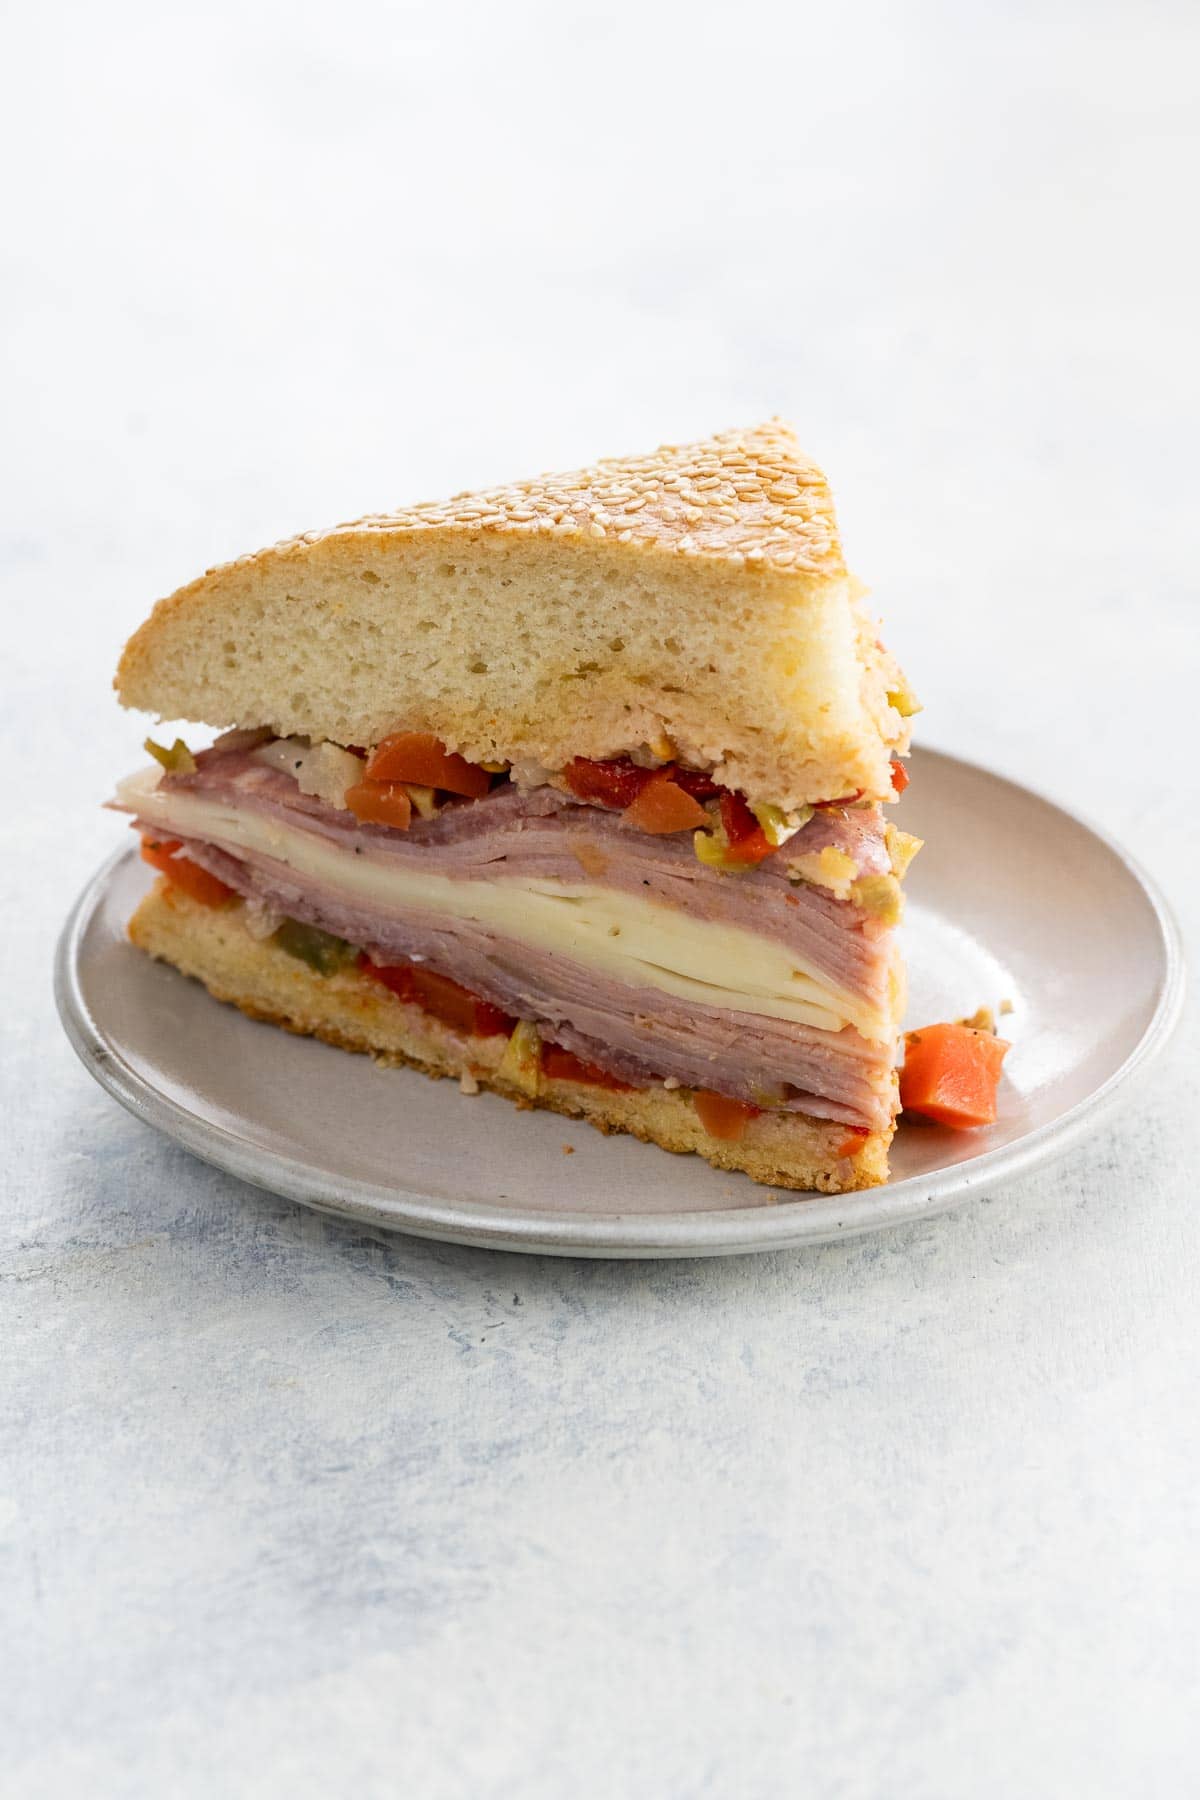 a classic muffaletta sandwich on homemade muffaletta bread